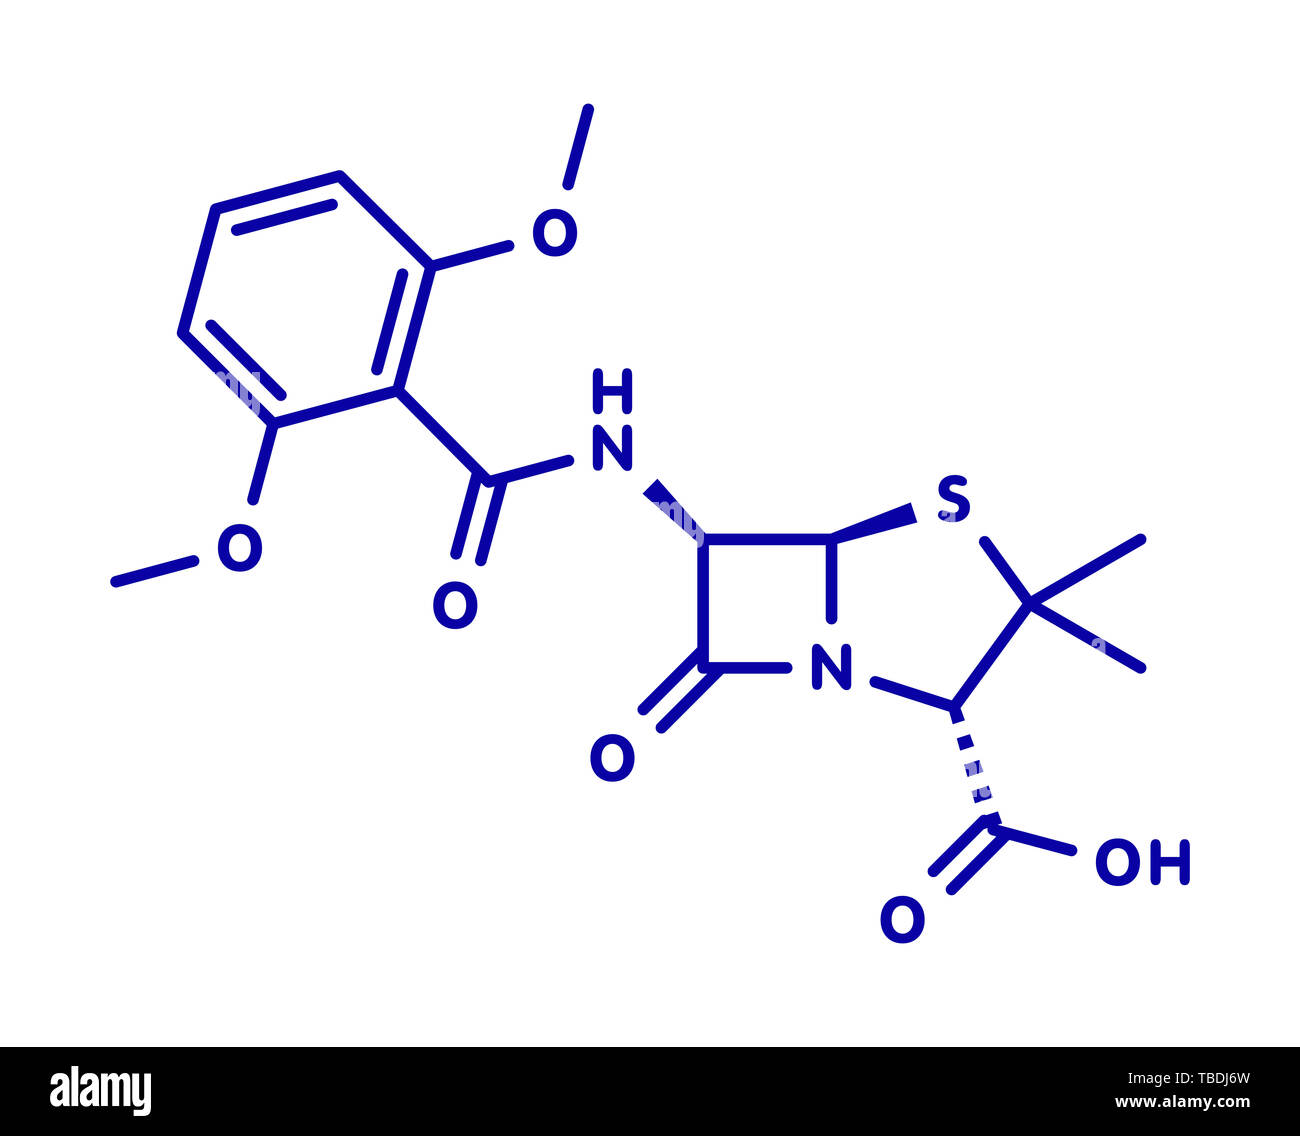 Meticillin antibiotic drug (beta-lactam class) molecule. MRSA stands for Methicillin-resistant staphylococcus aureus. Blue skeletal formula on white background. Stock Photo